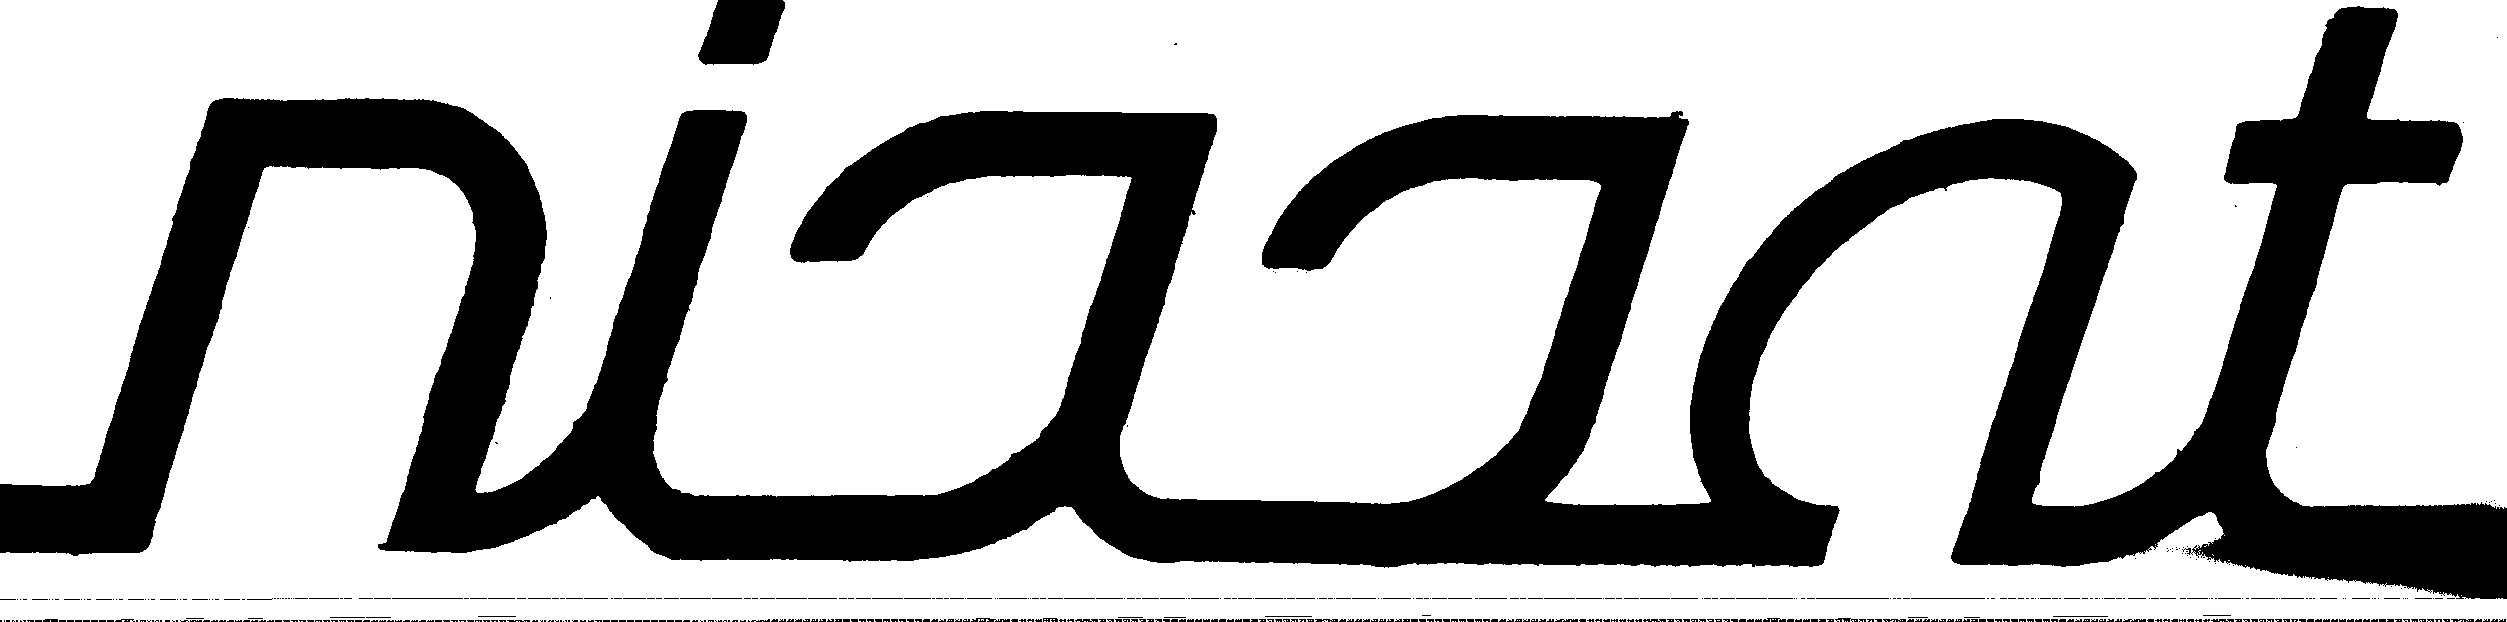 NISSAT Logo (17223 bytes)